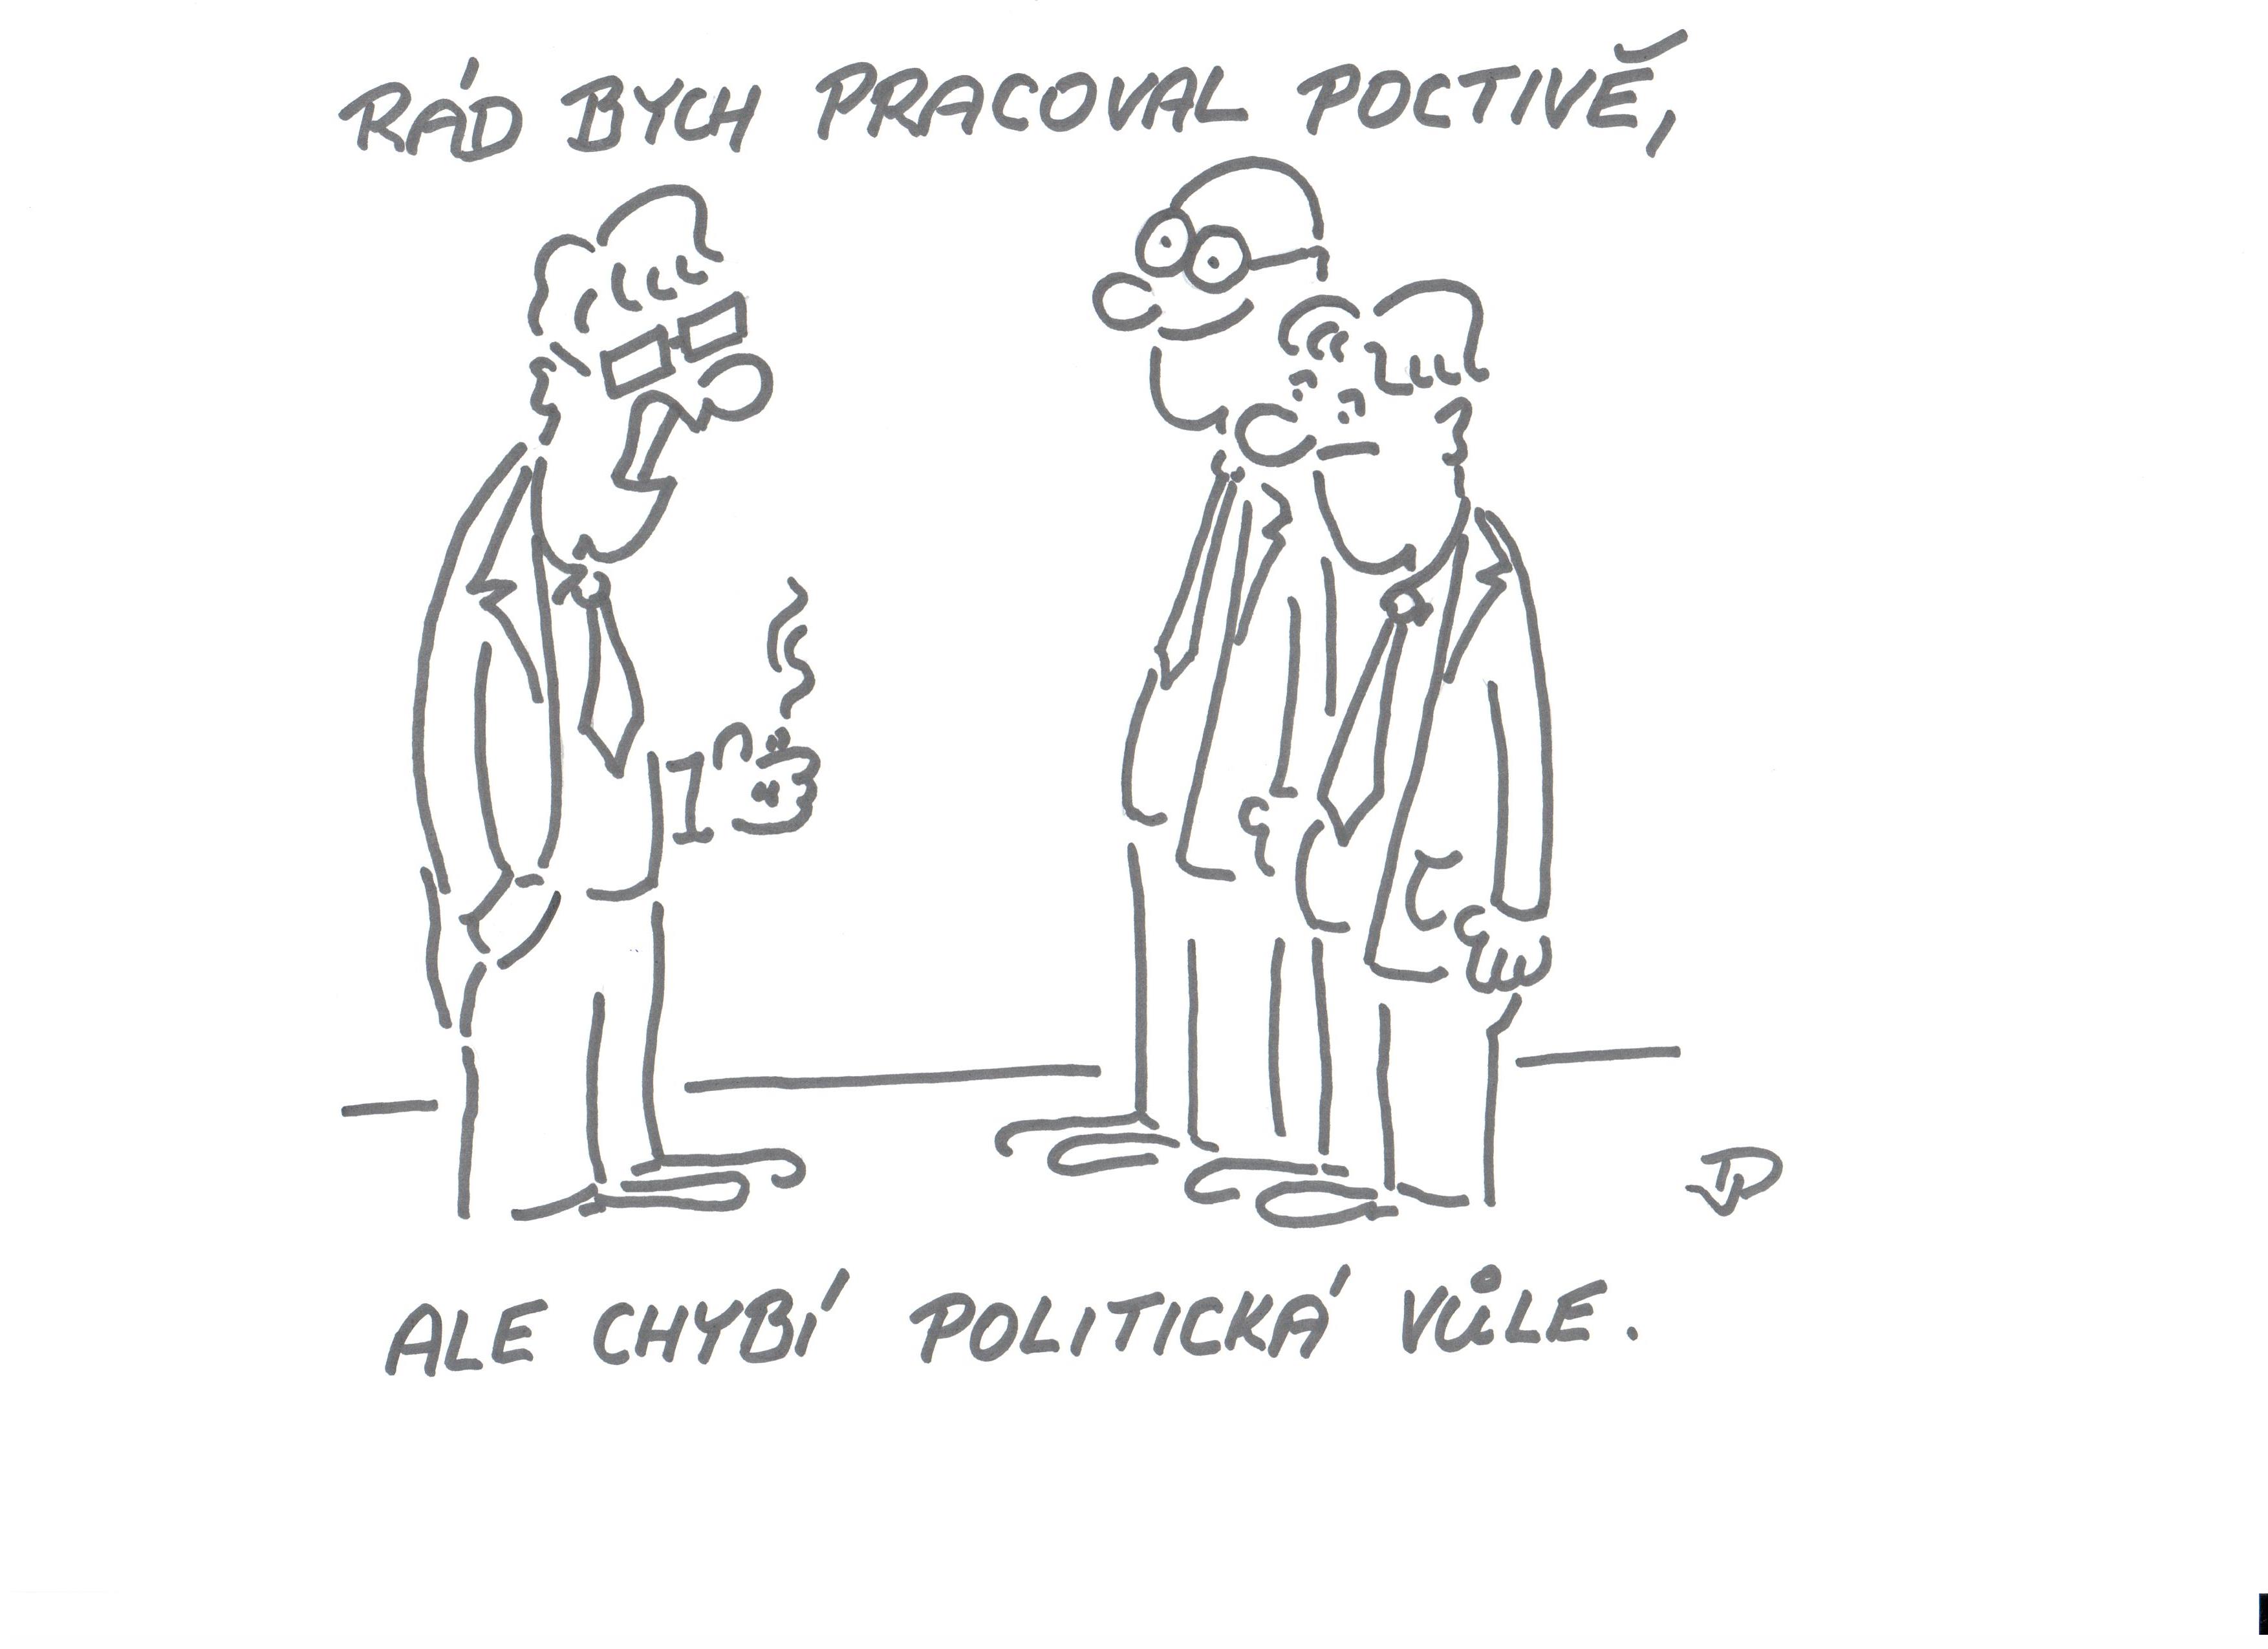 Politicka_Vule